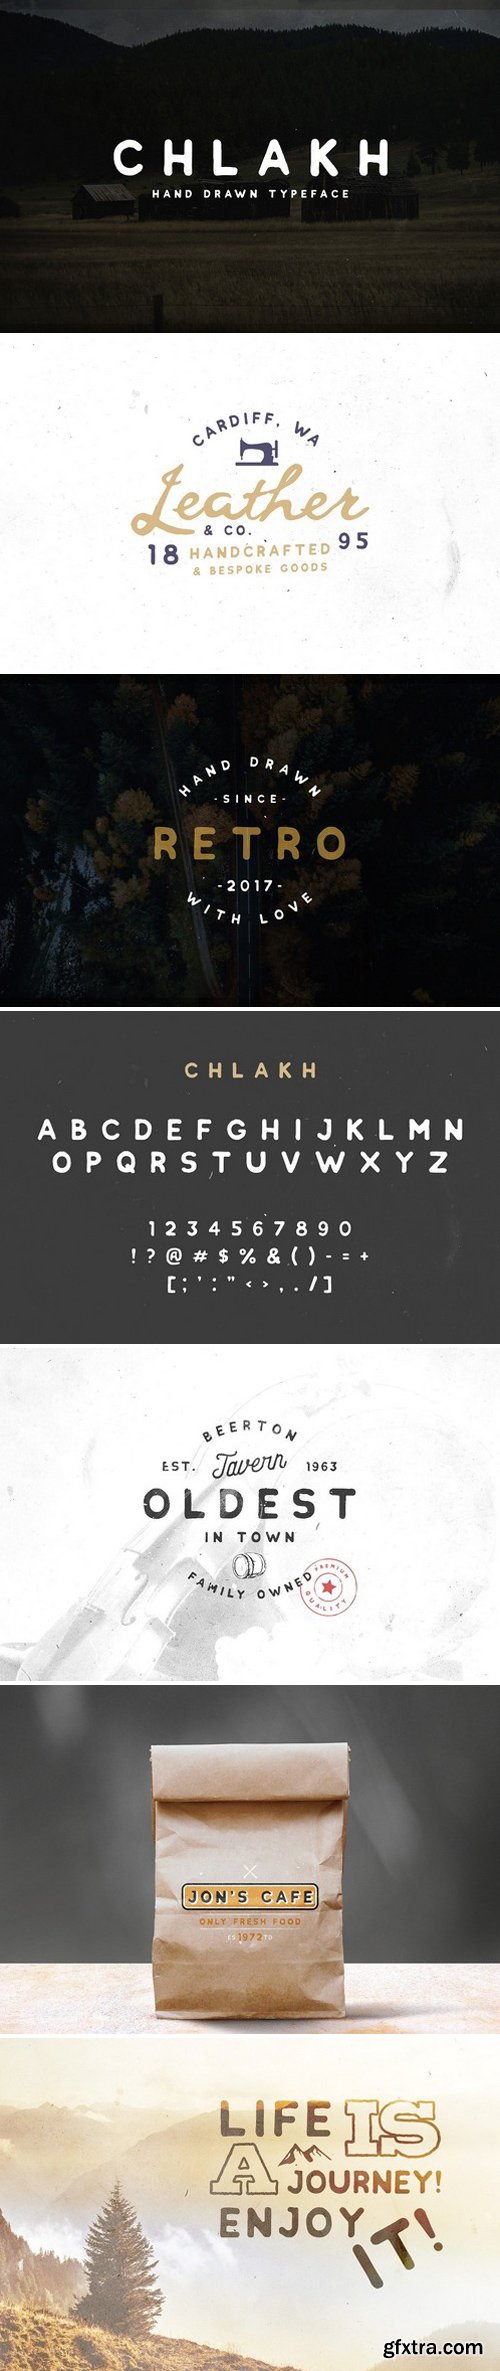 CM - Chlakh - Hand Drawn Typeface 1590819